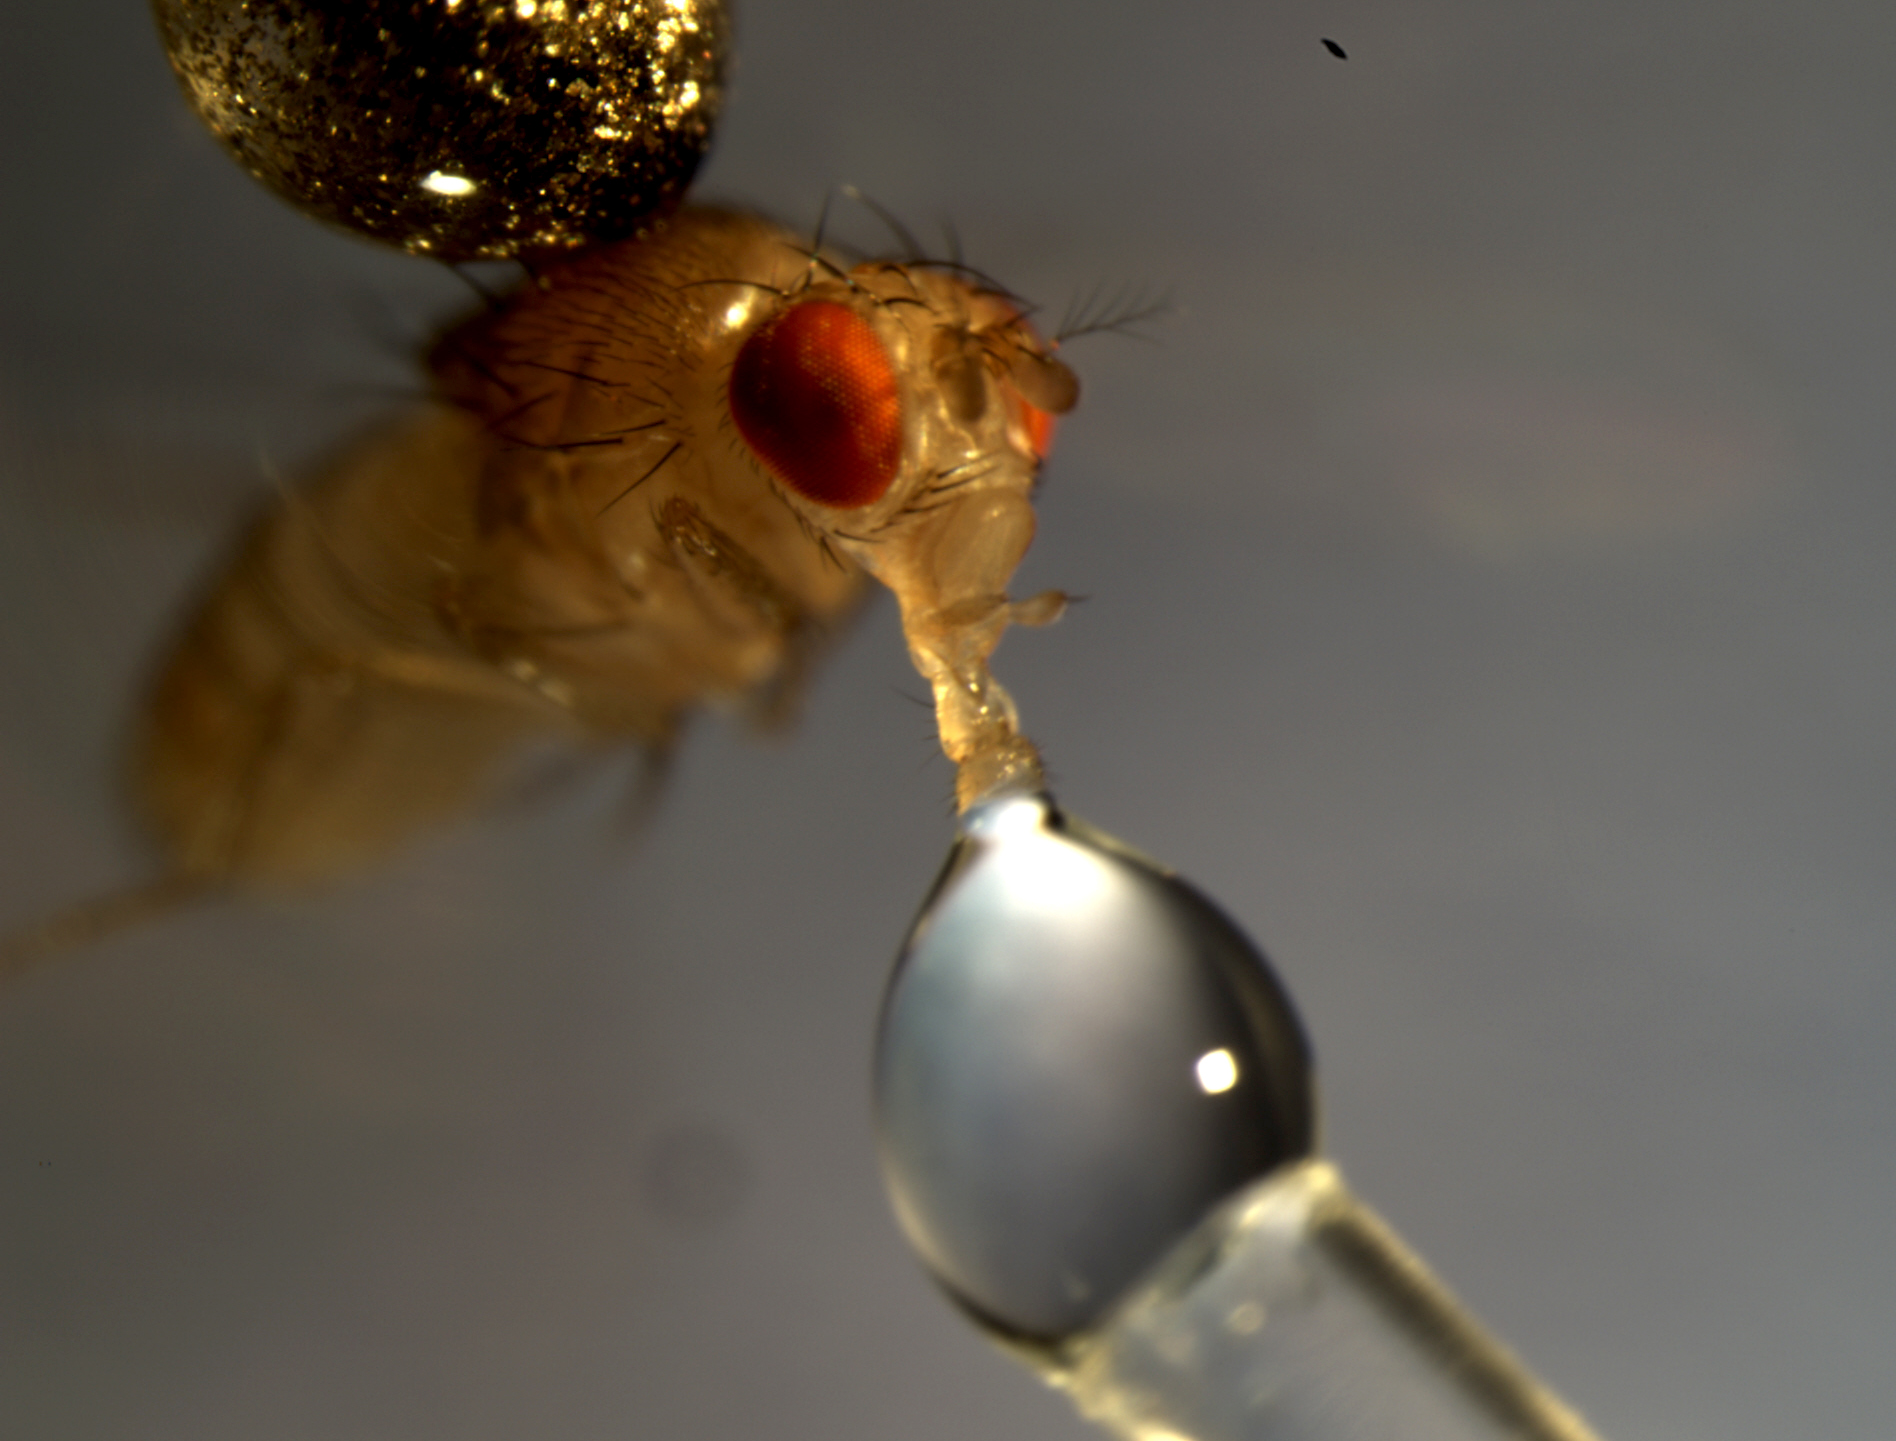 Drosophila drinking sugar solution with proboscis extended